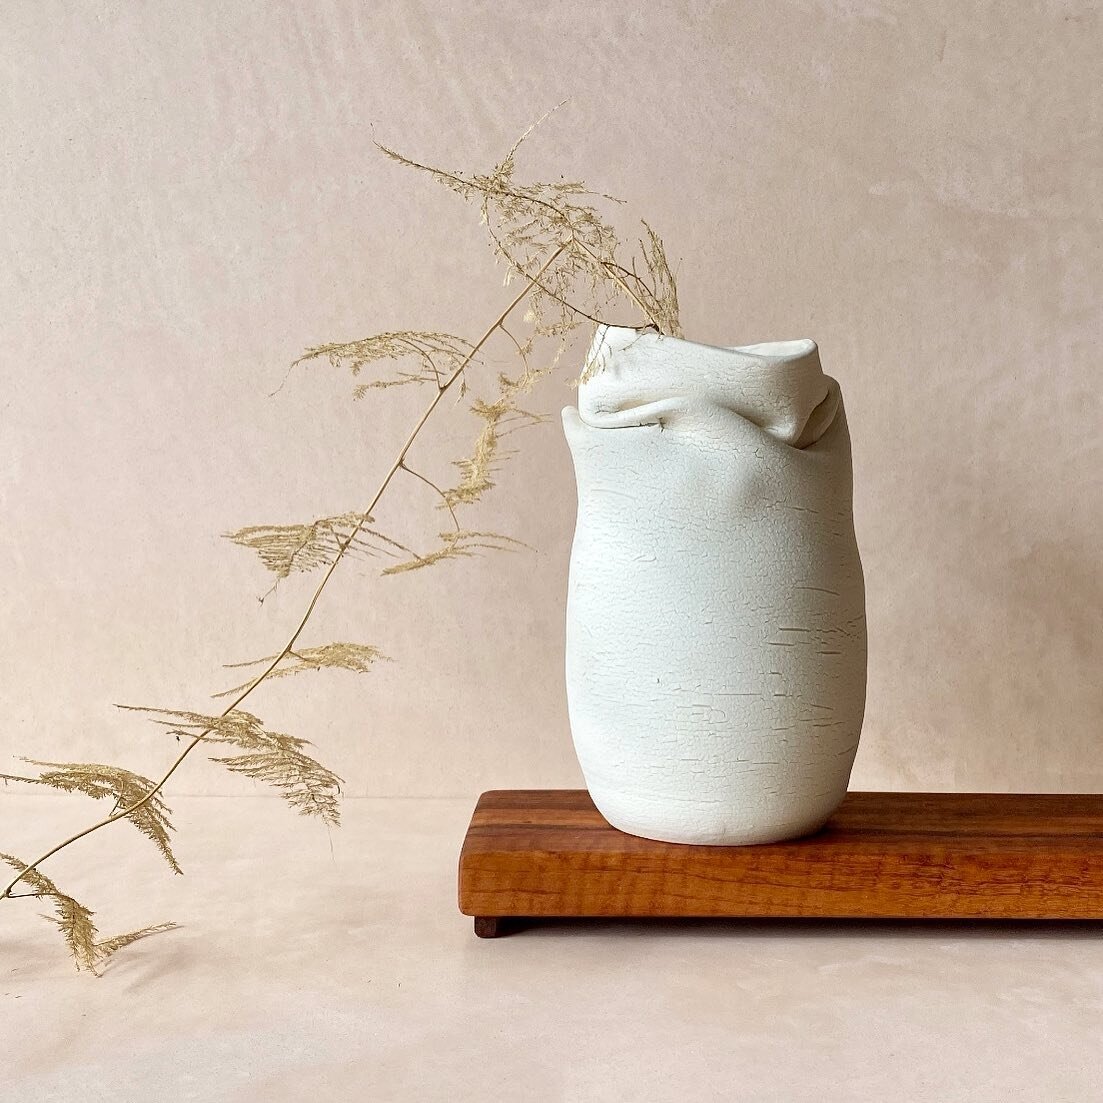 v a s e //
perfectly imperfect white texture floral vase
.
.
.
#wabisabi #whitevase #minimalist #ceramics #ceramicart #artist #slowliving #pottery #ceramicstudio #lapottery #interiordesign #homedecor #nudehome #homestyling #homedecor #floraldesign